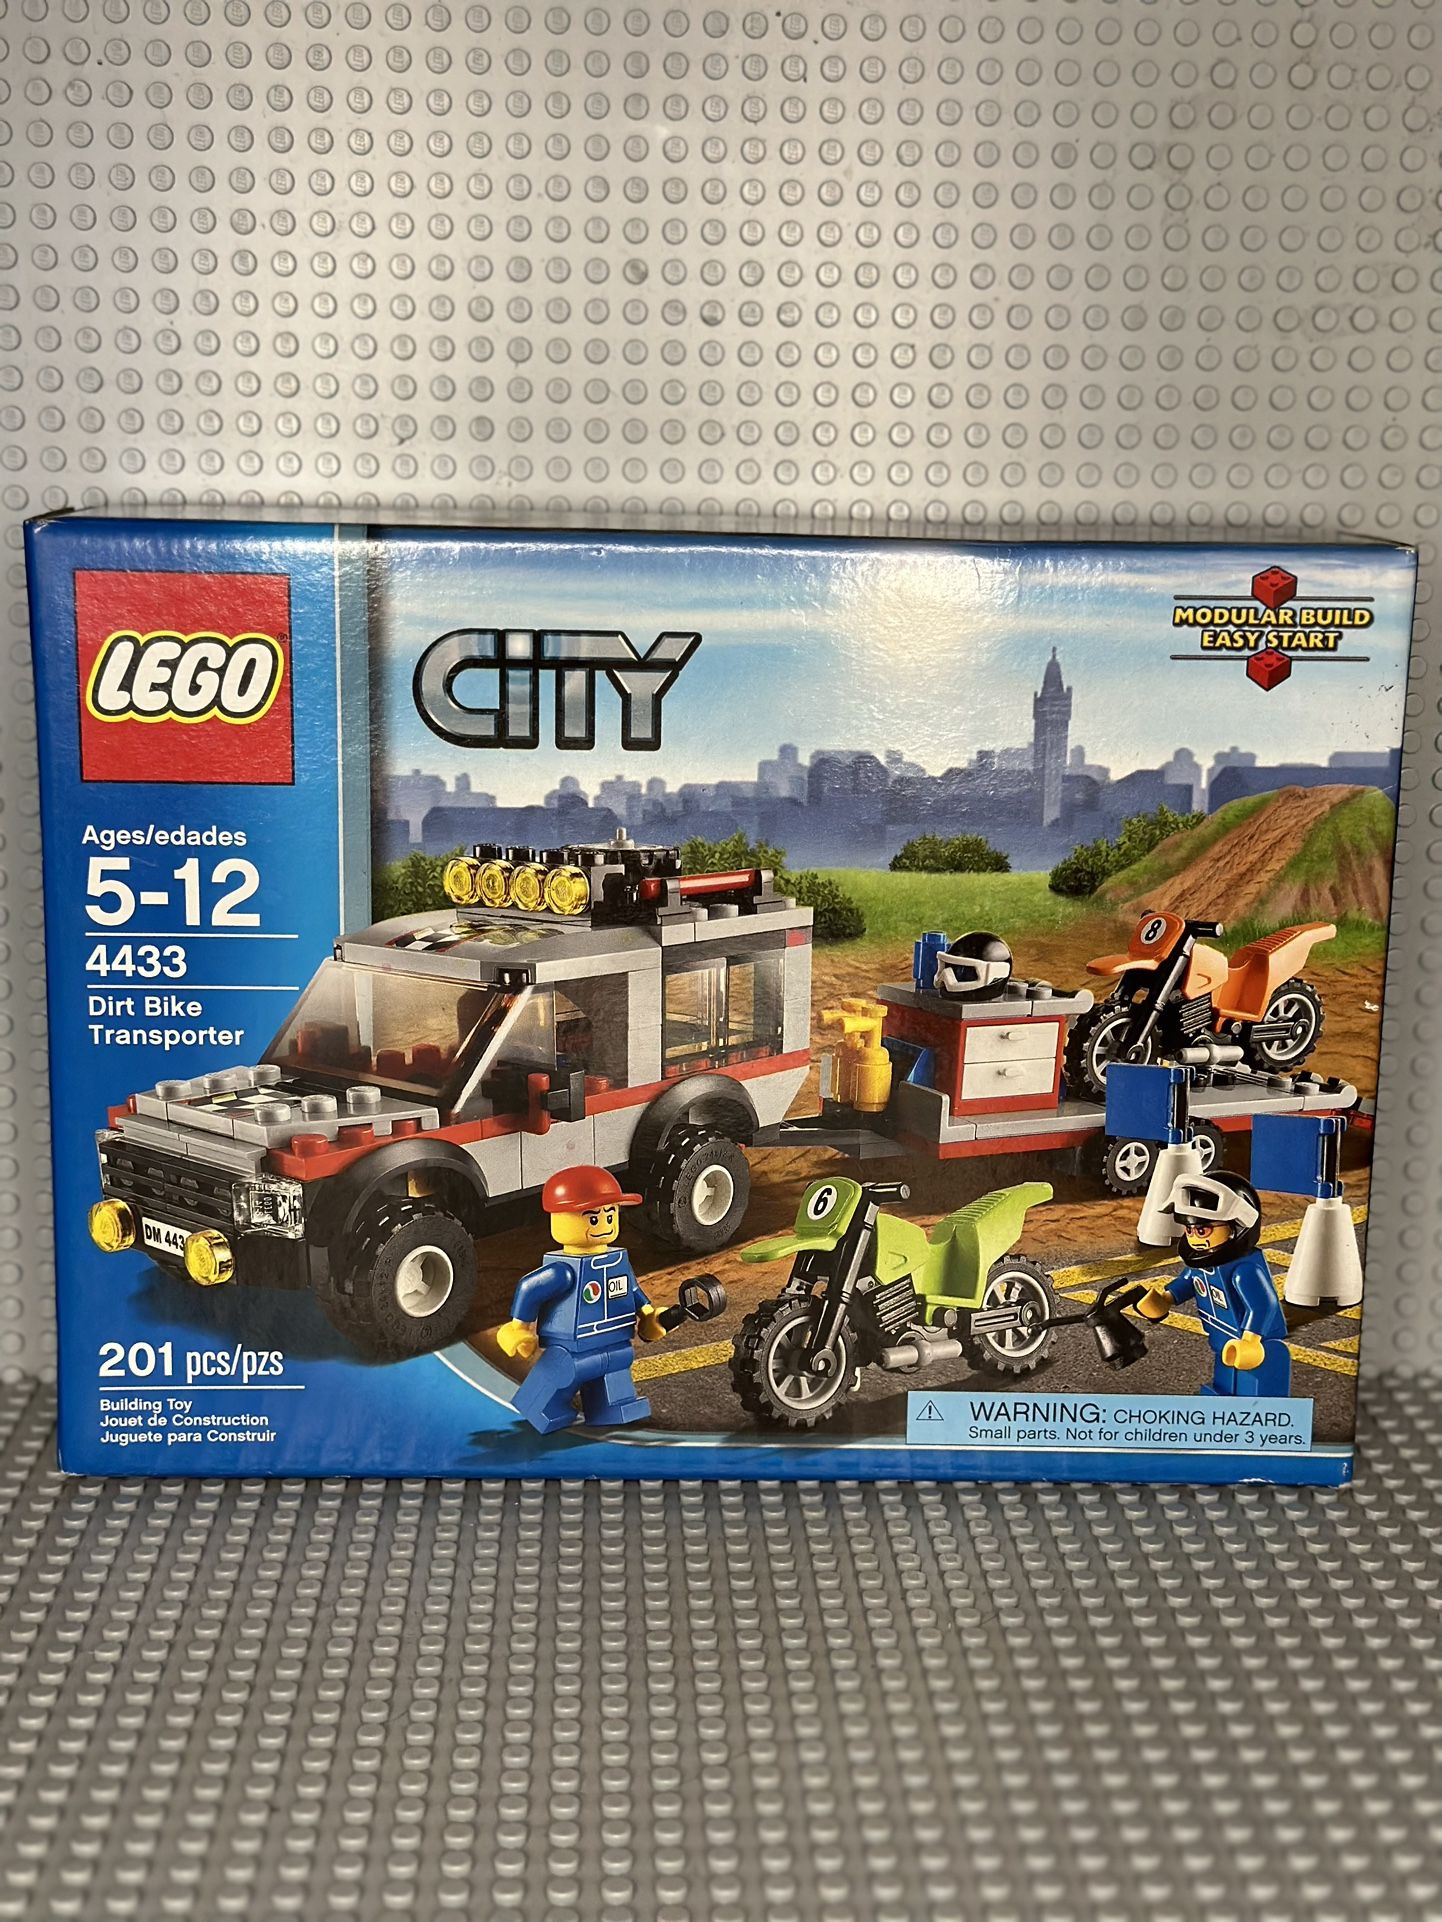 LEGO City Dirt Bike Transporter 4433 New In Sealed Box